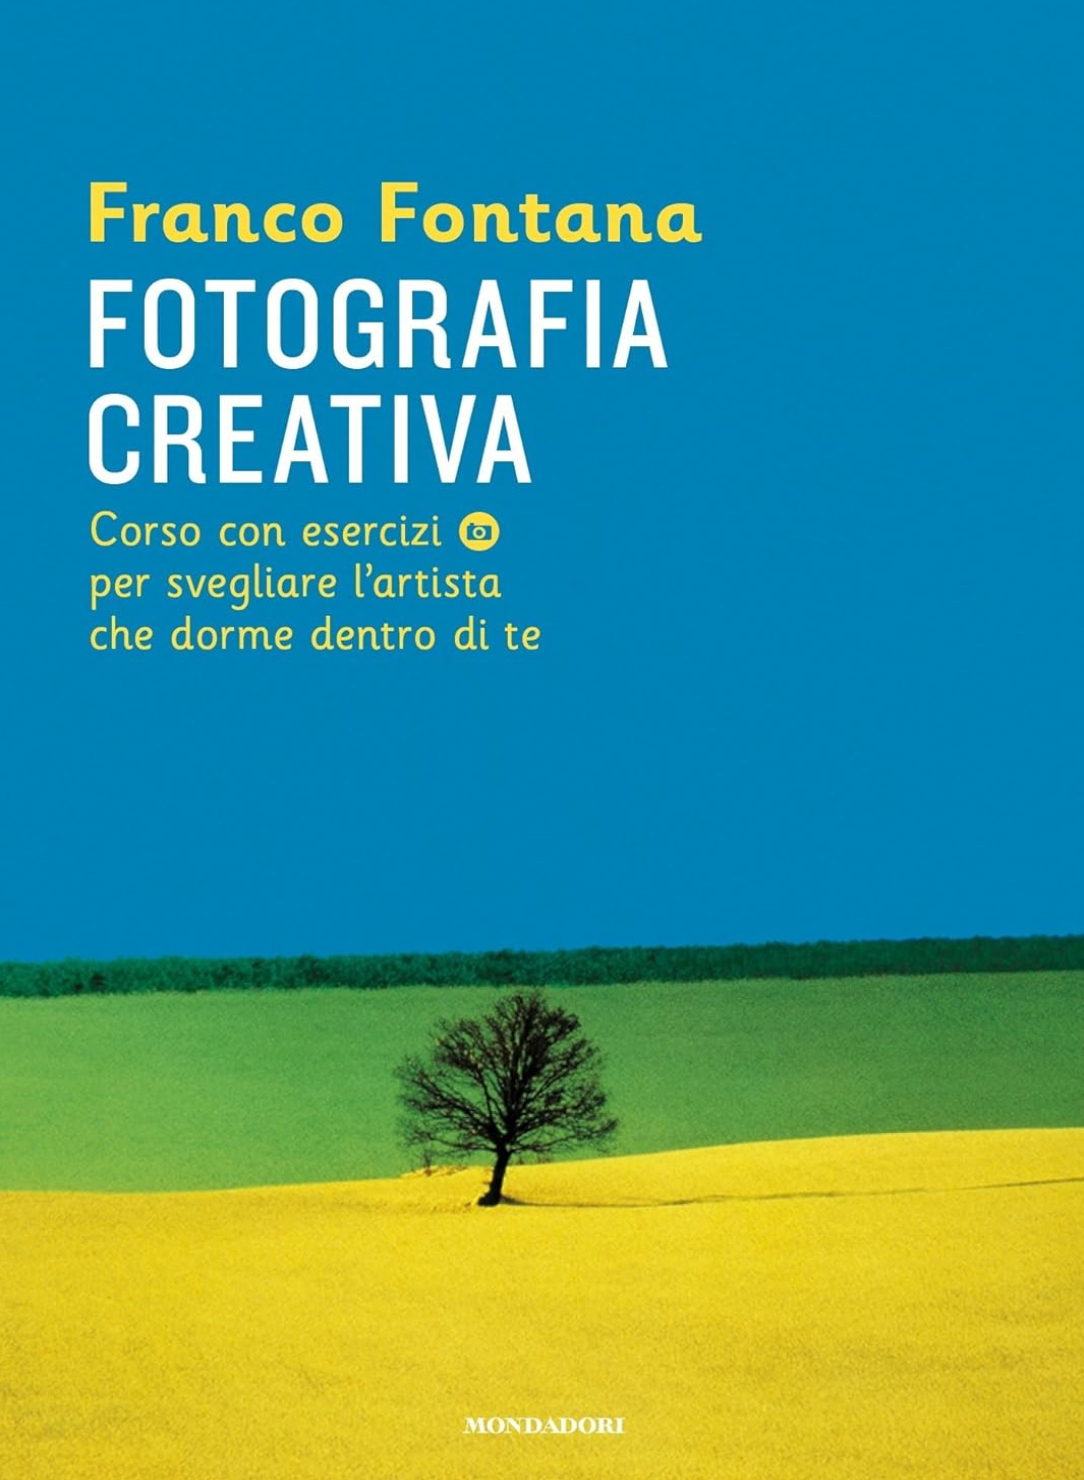 Franco Fontana “fotografia creativa”